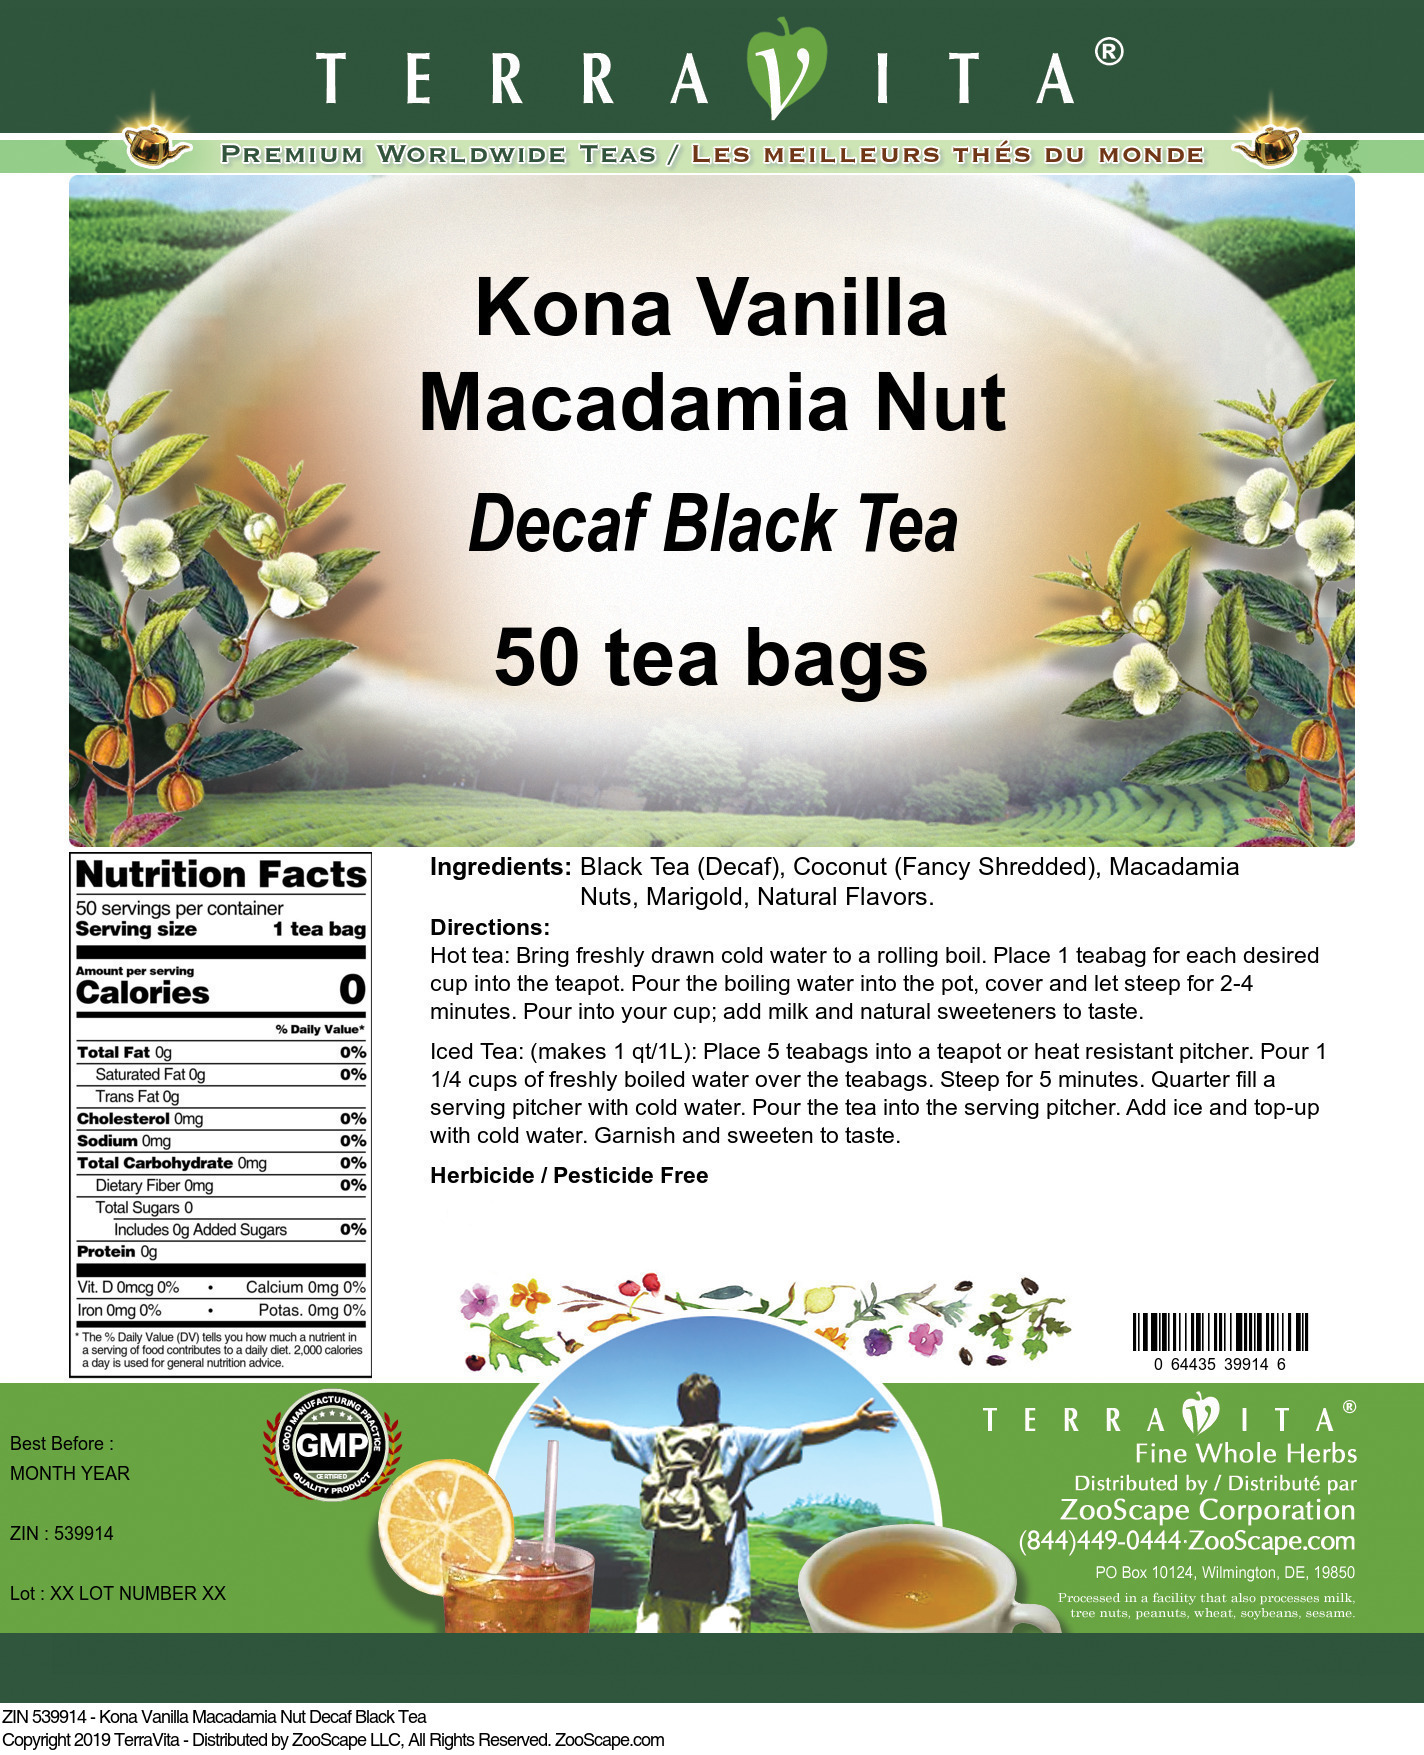 Kona Vanilla Macadamia Nut Decaf Black Tea - Label